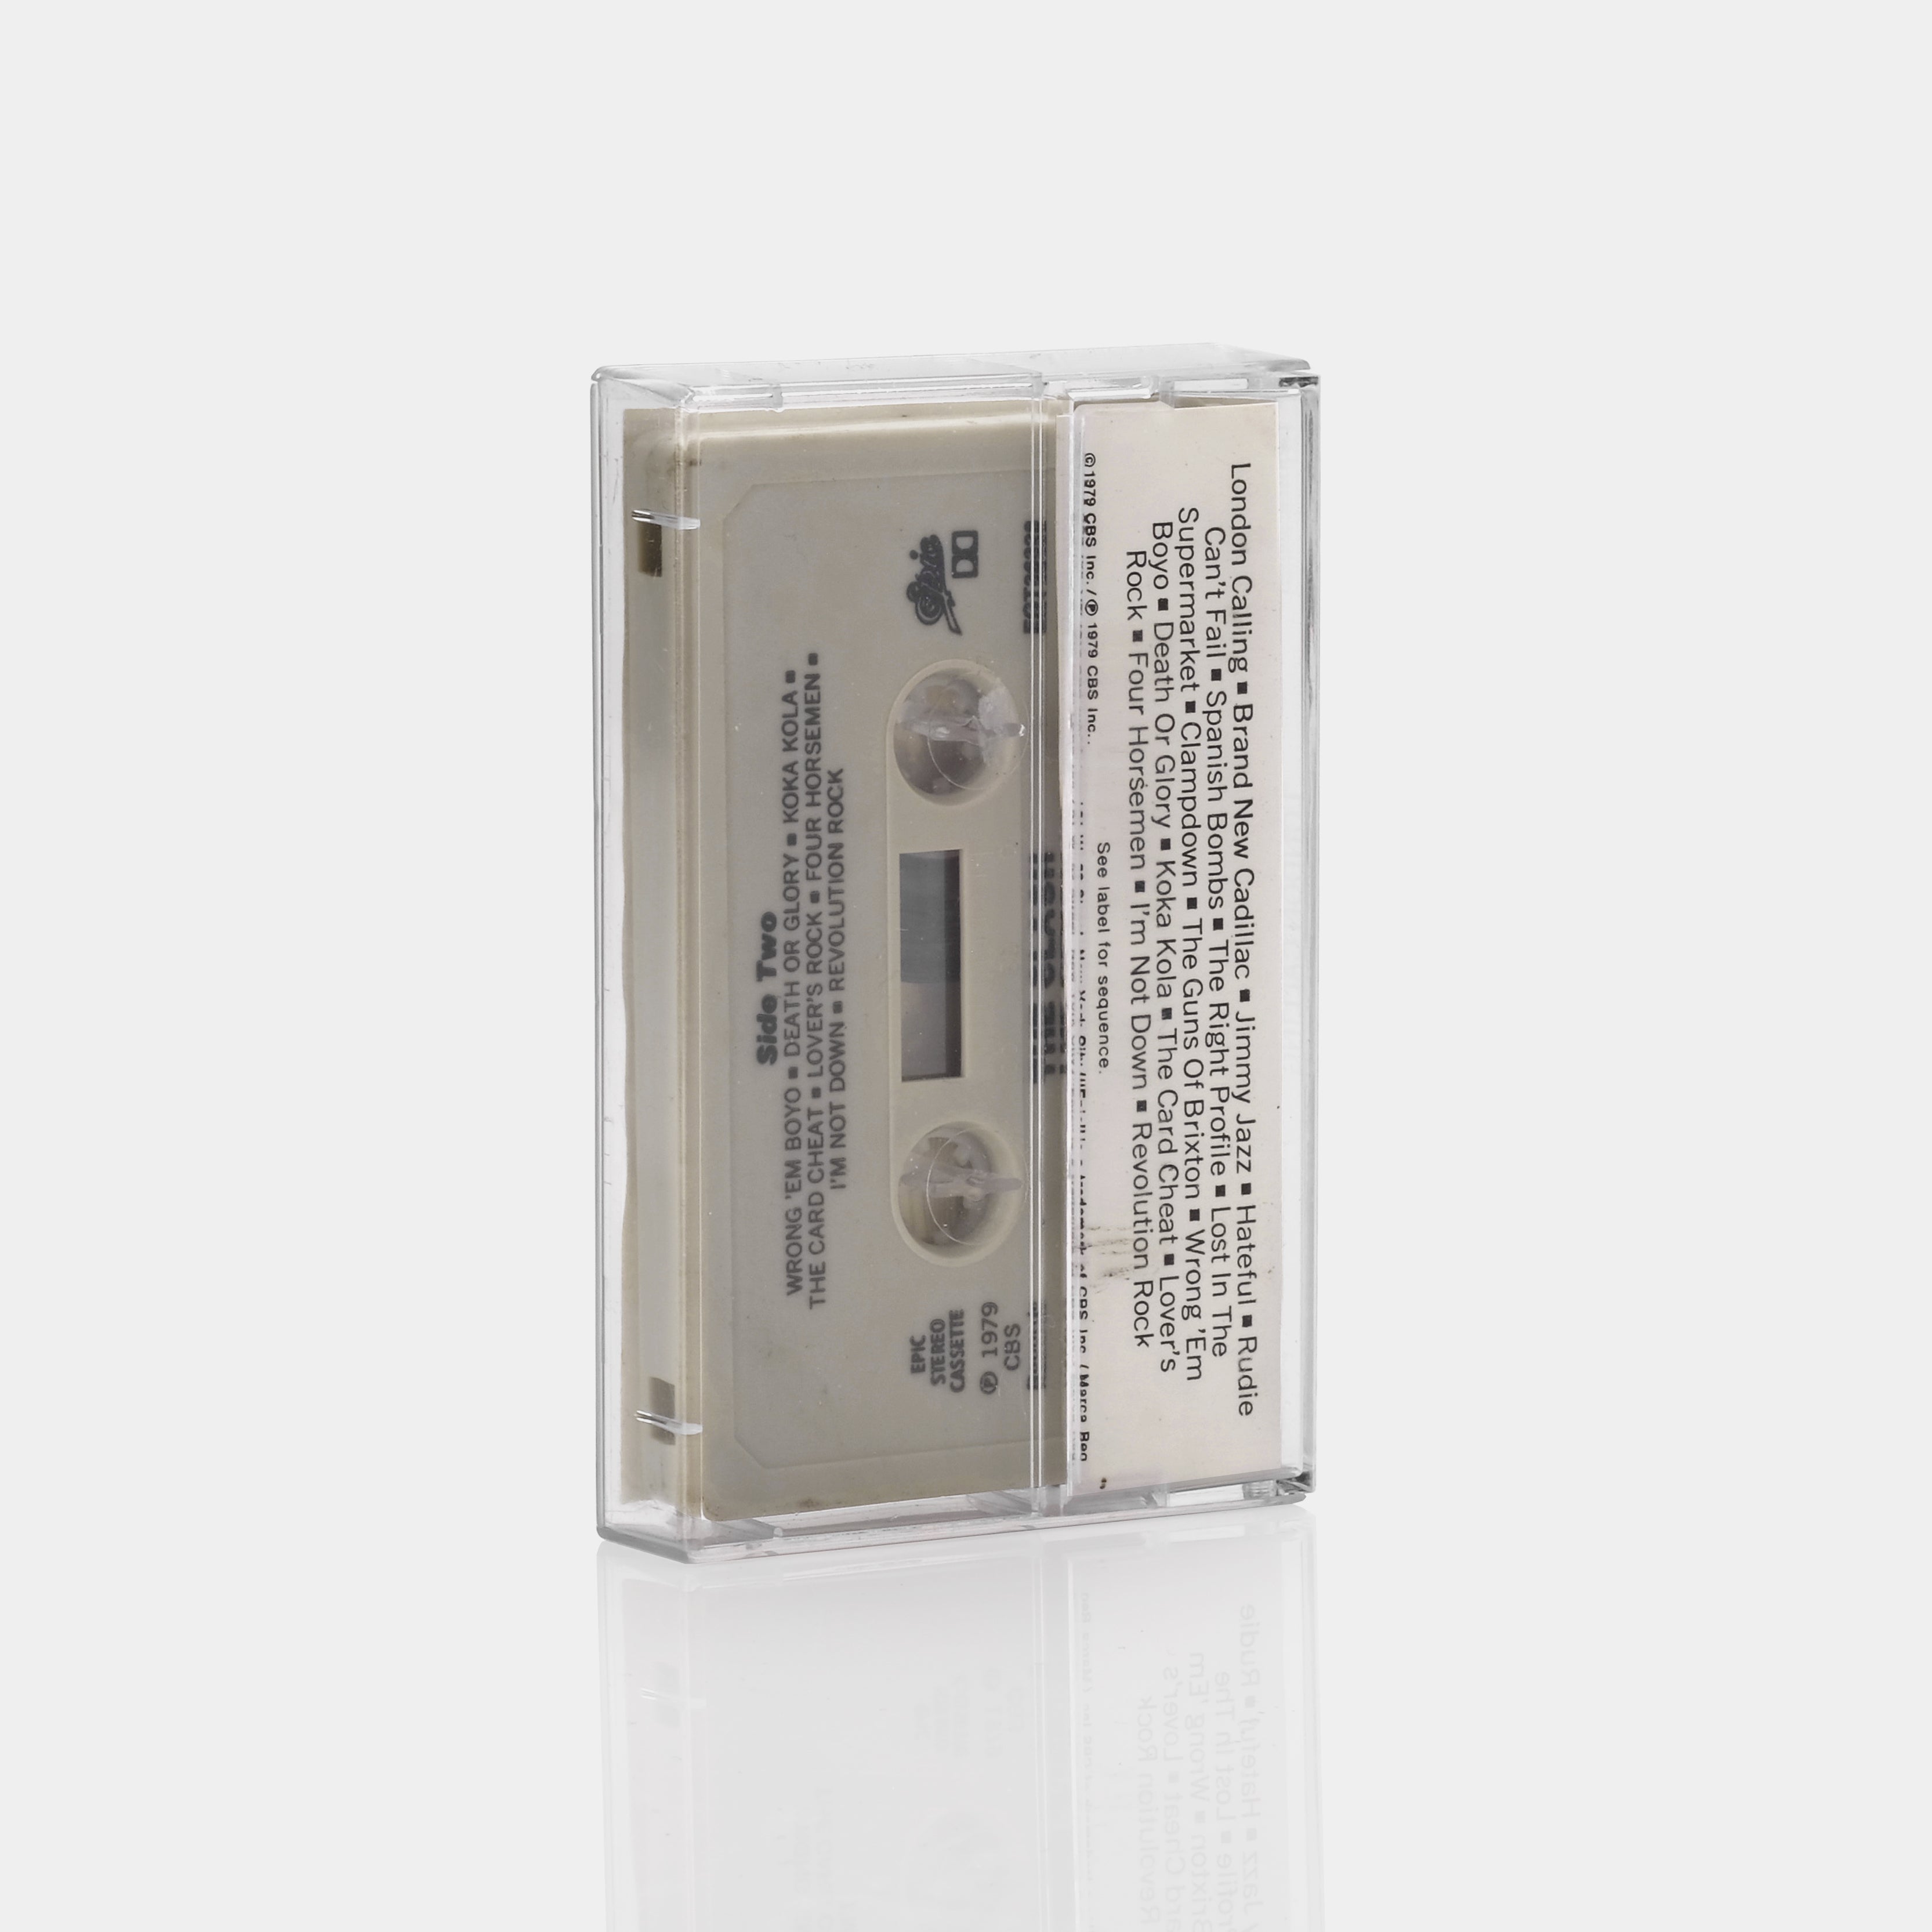 The Clash - London Calling Cassette Tape